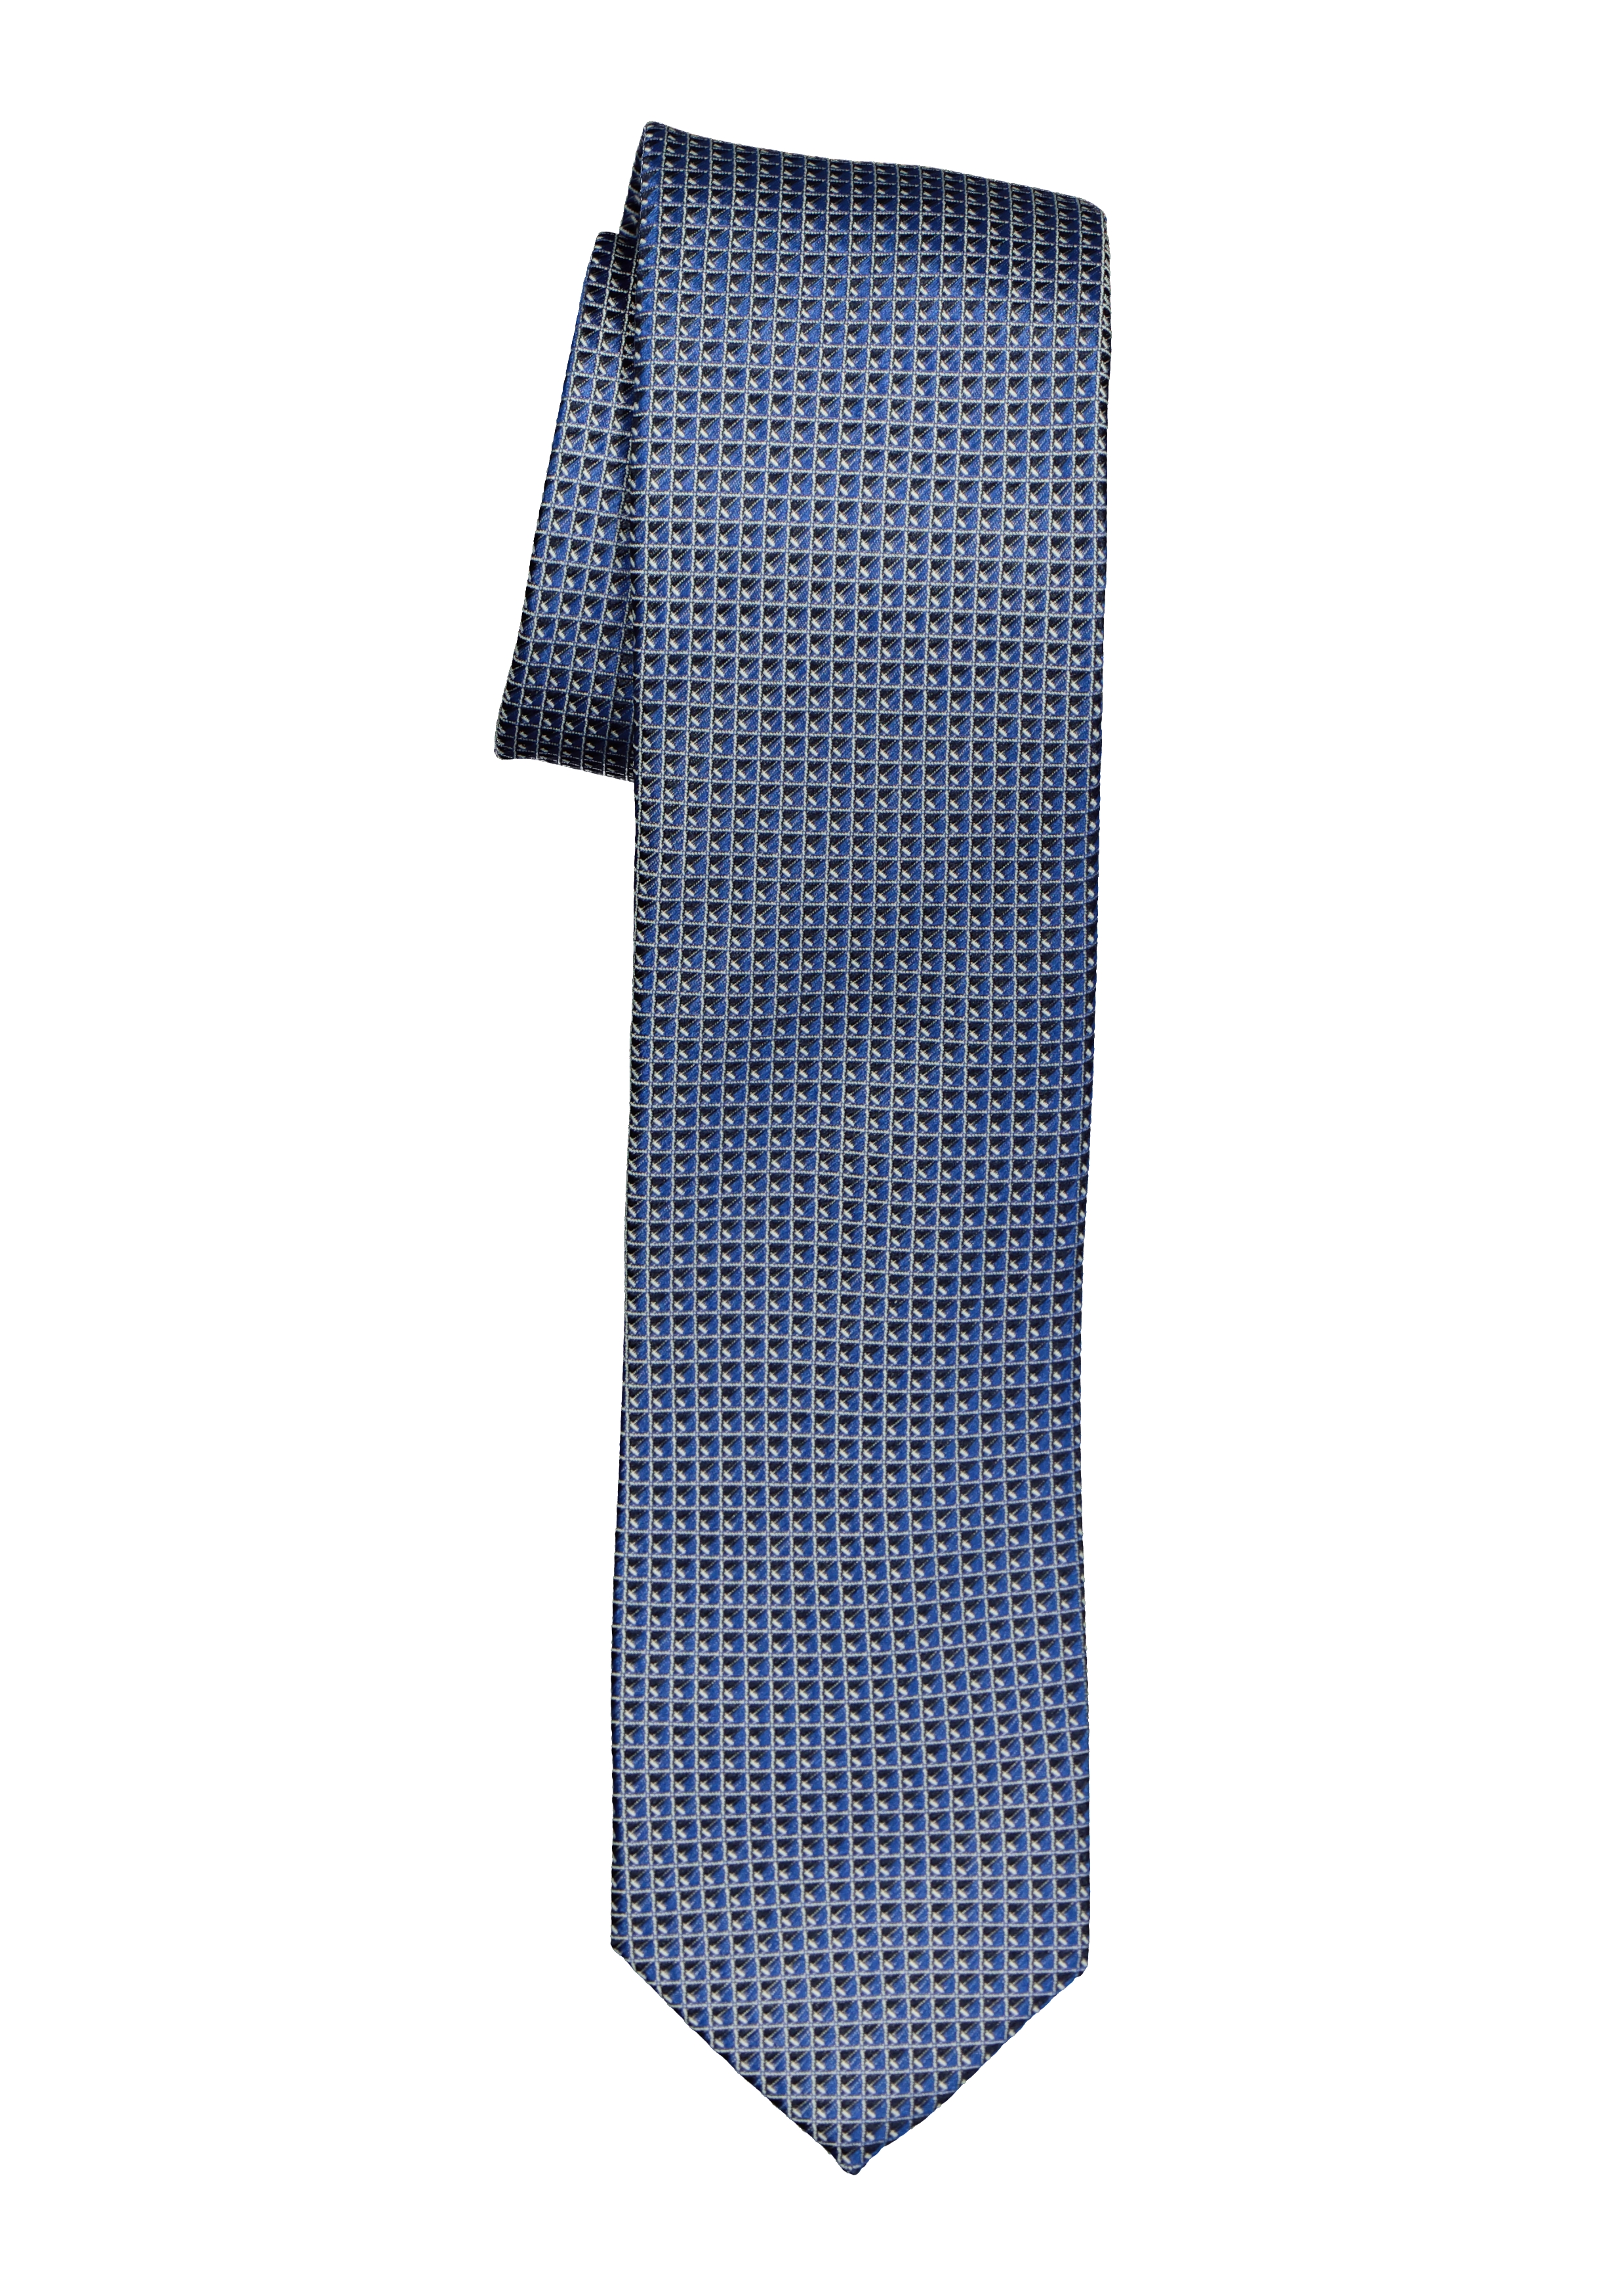 OLYMP smalle stropdas, donker blauw